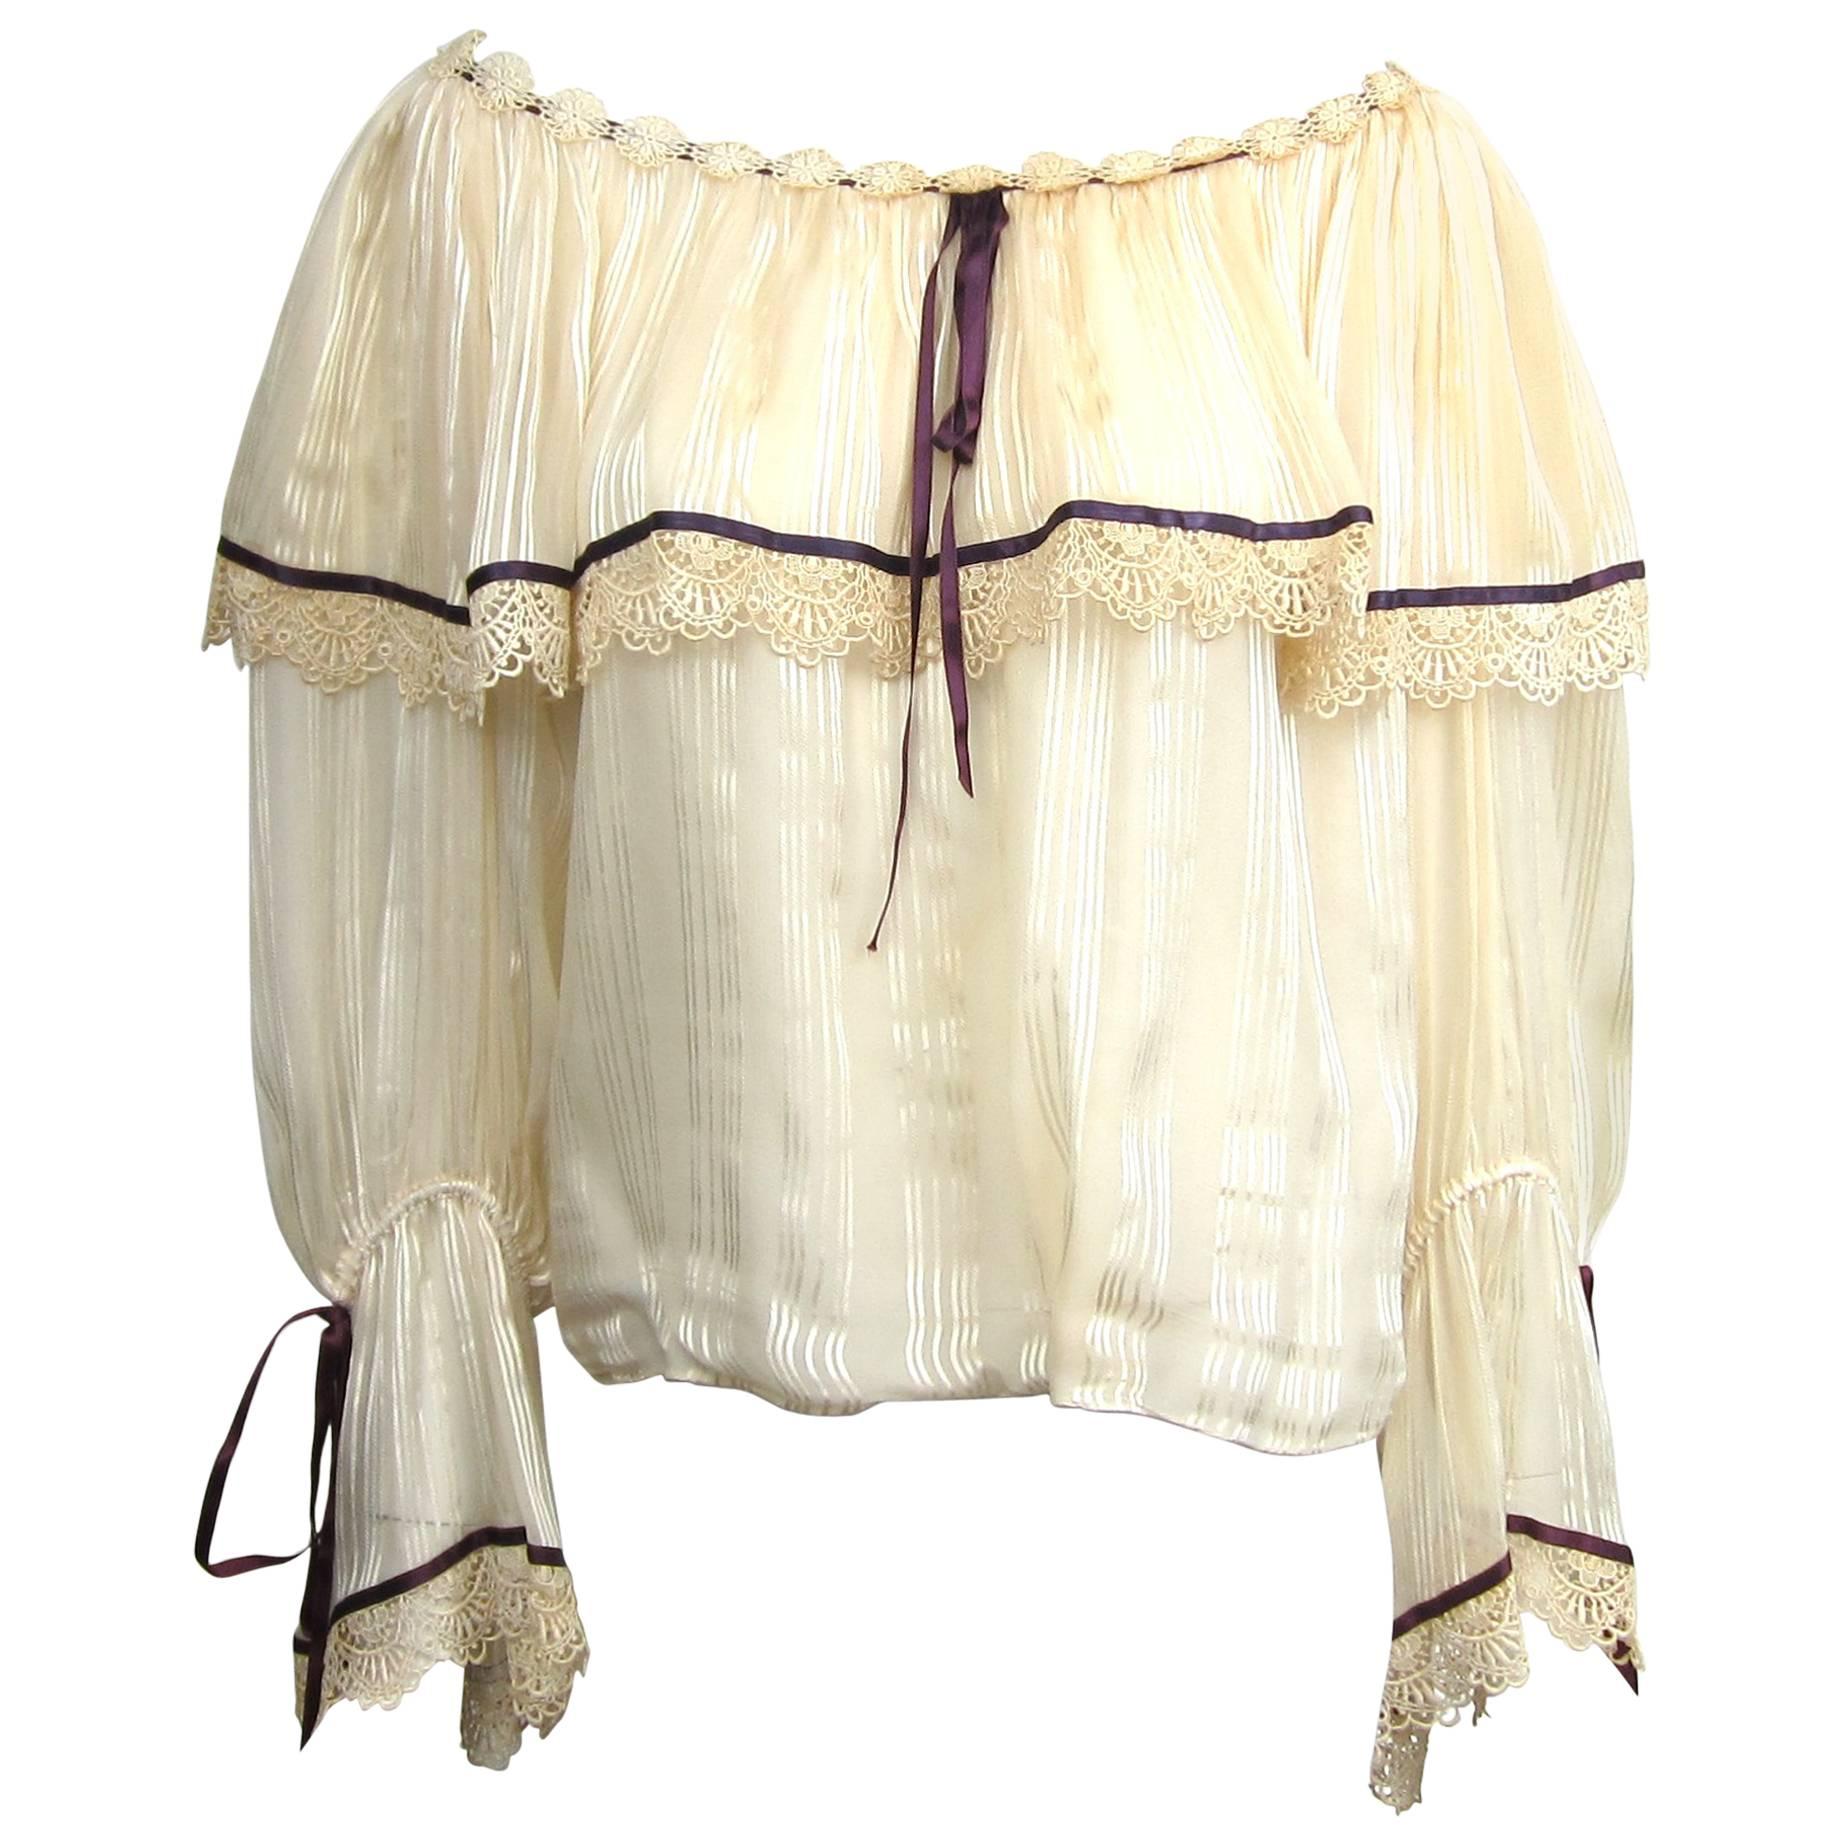 1970s Yves Saint Laurent Silk Pheasant Ruffled Numbered Blouse